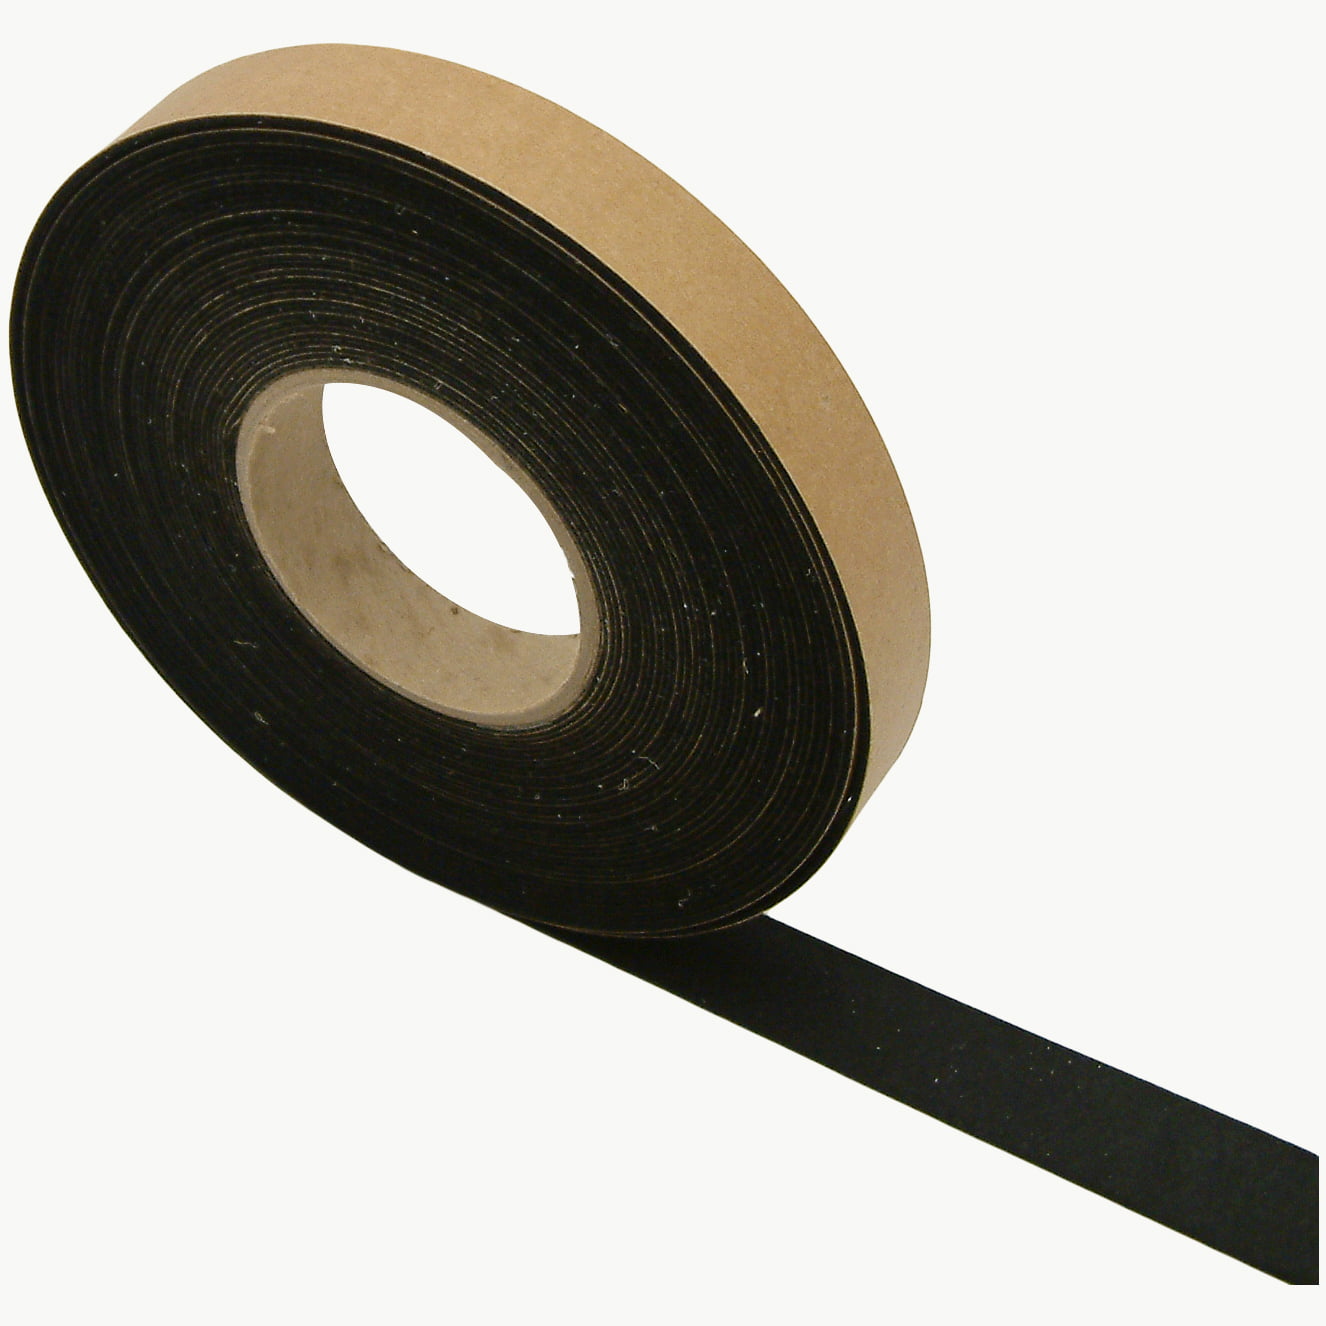 Automotive Marine Felt Polyester Binding Tape 50 yd roll- BLACK 503